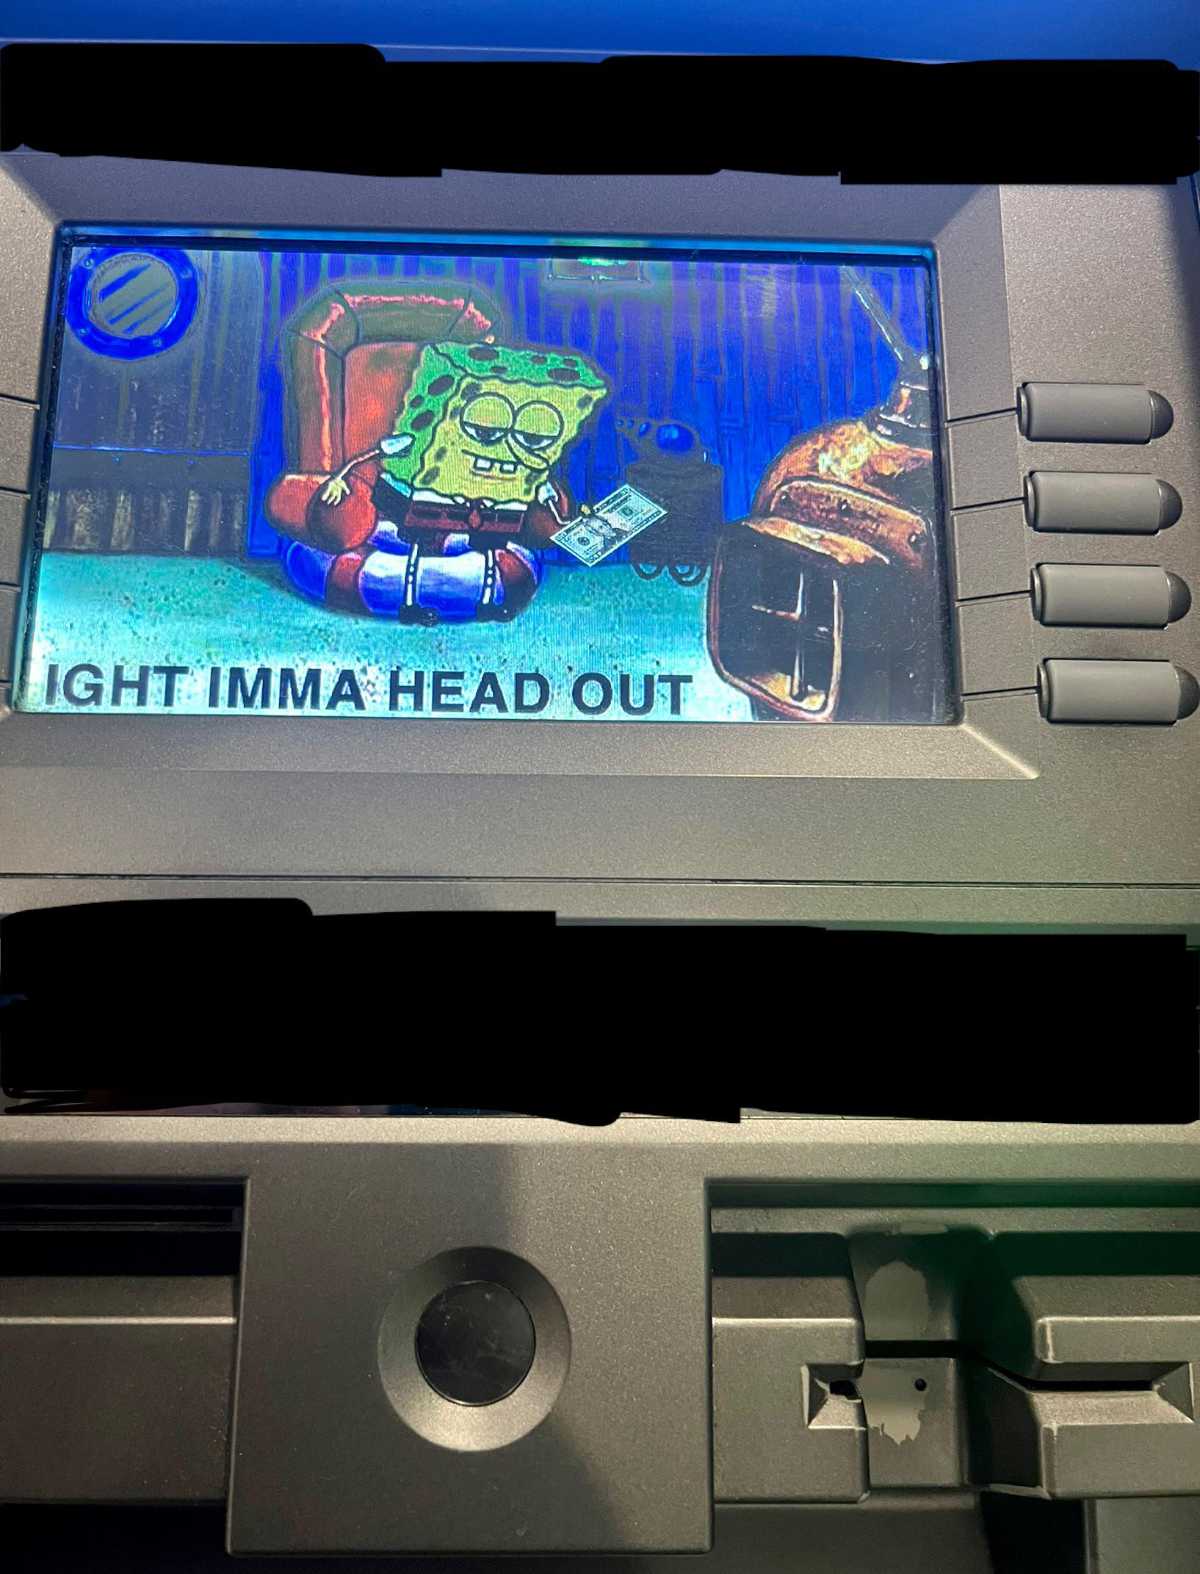 I used an ATM that had a SpongeBob Meme as a Screensaver